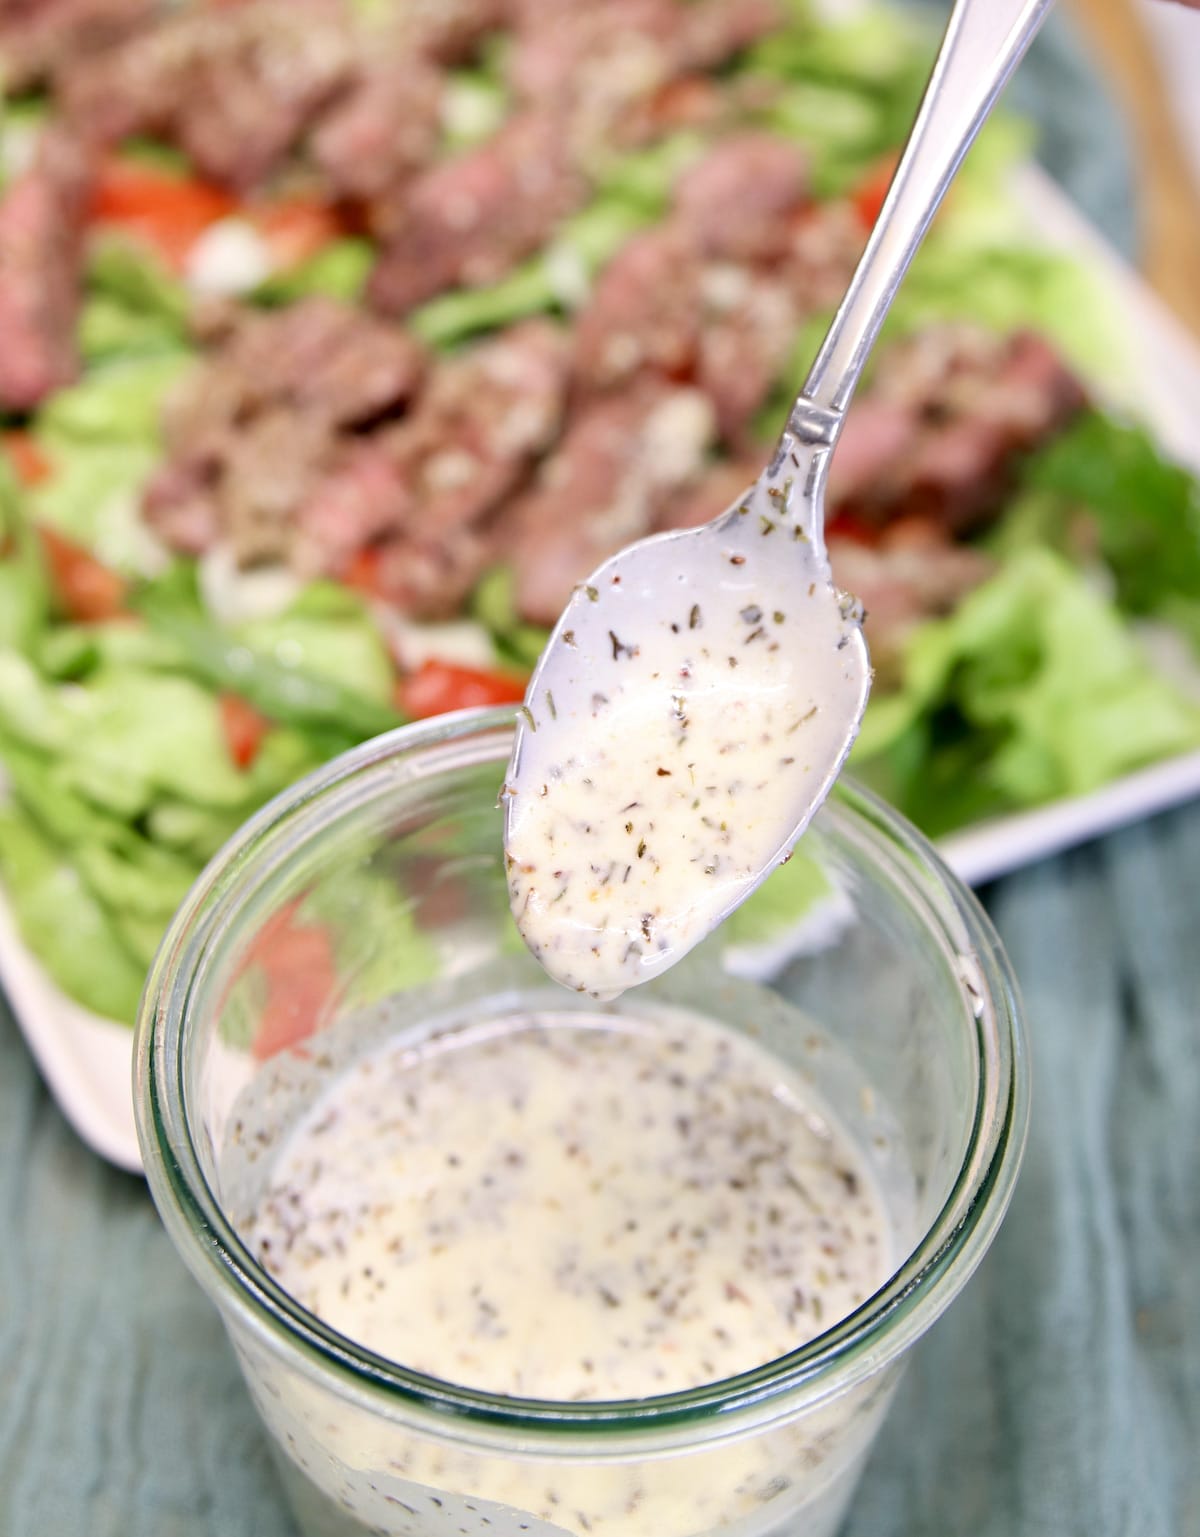 Spoon of Creamy Italian Salad Dressing dipping from jar.